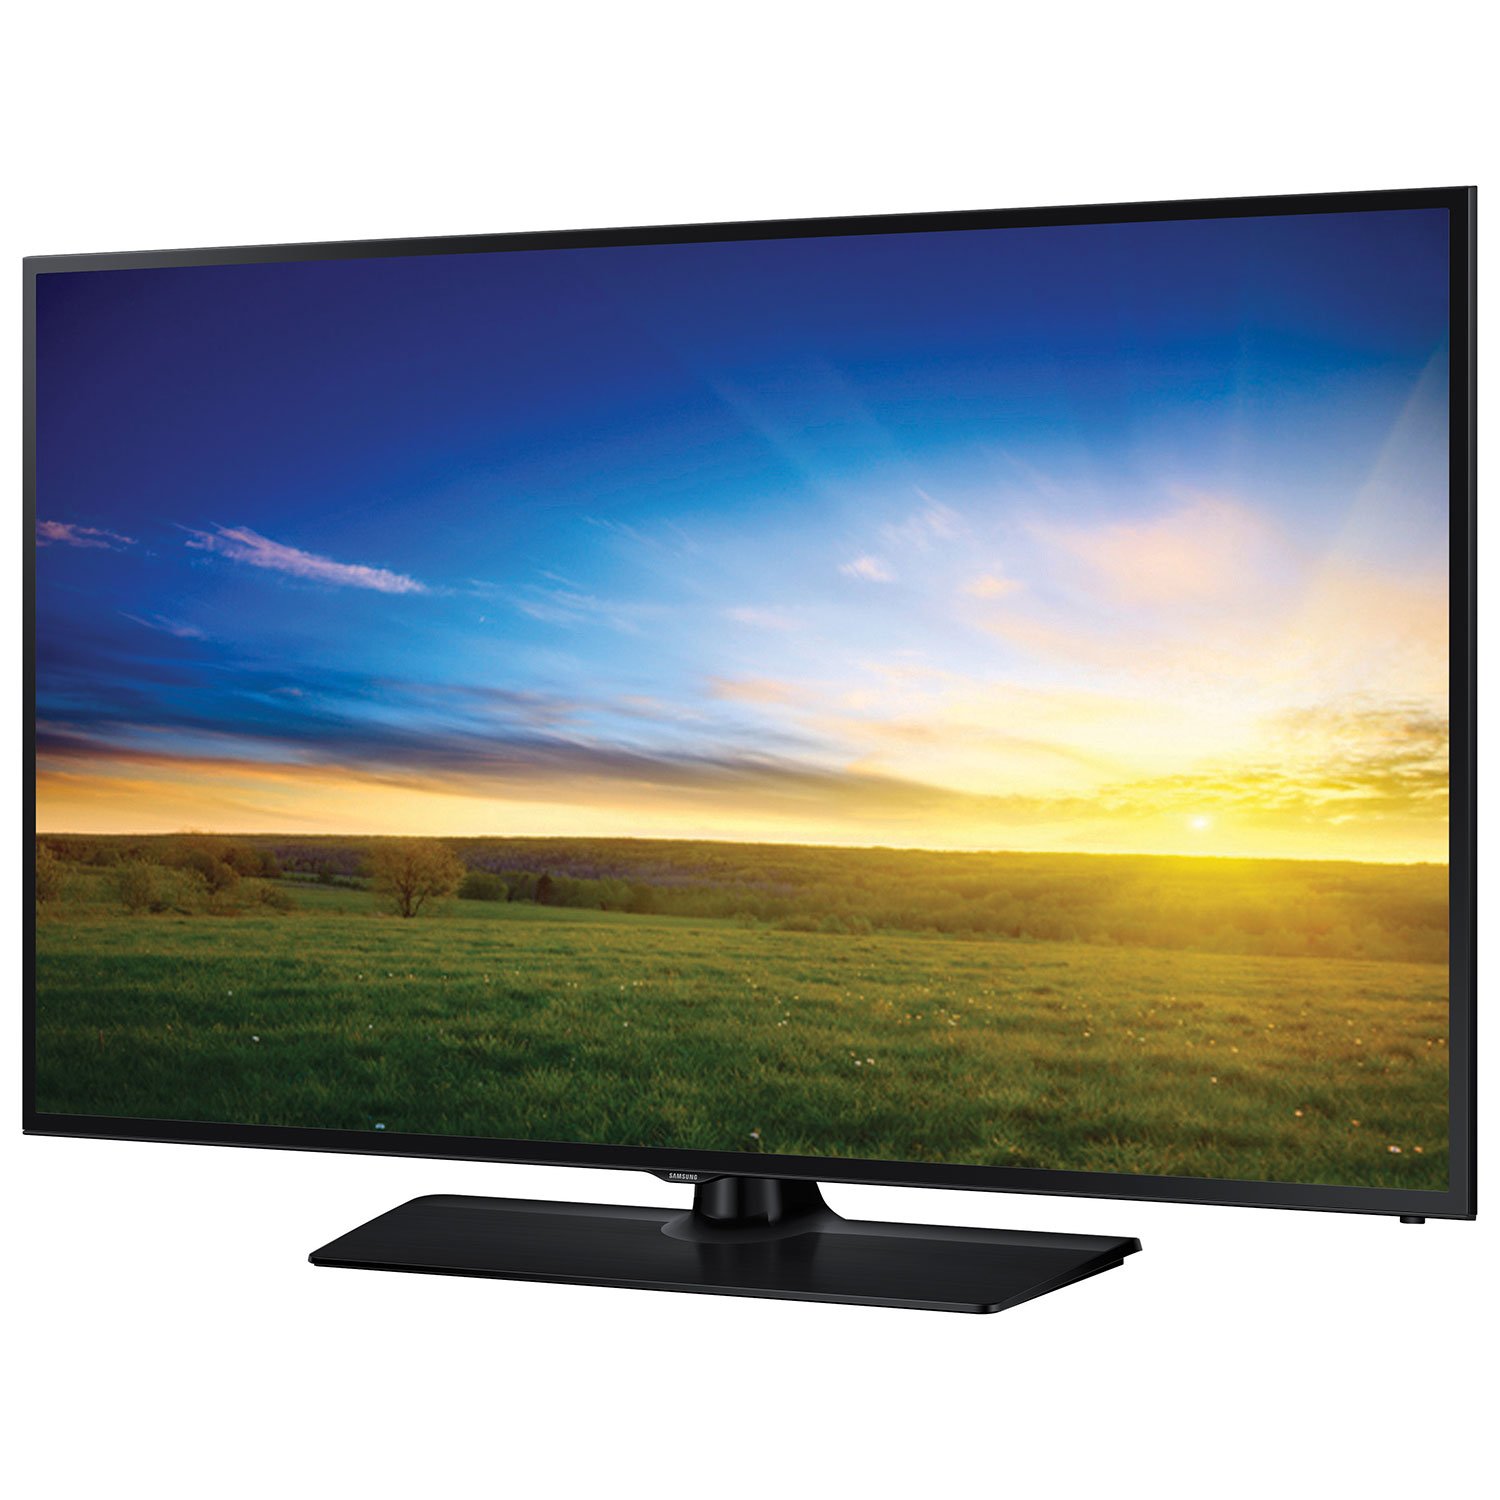 Озон телевизоры lg. [TV]Samsung led58. TV Samsung led 40. Samsung Smart TV 40.